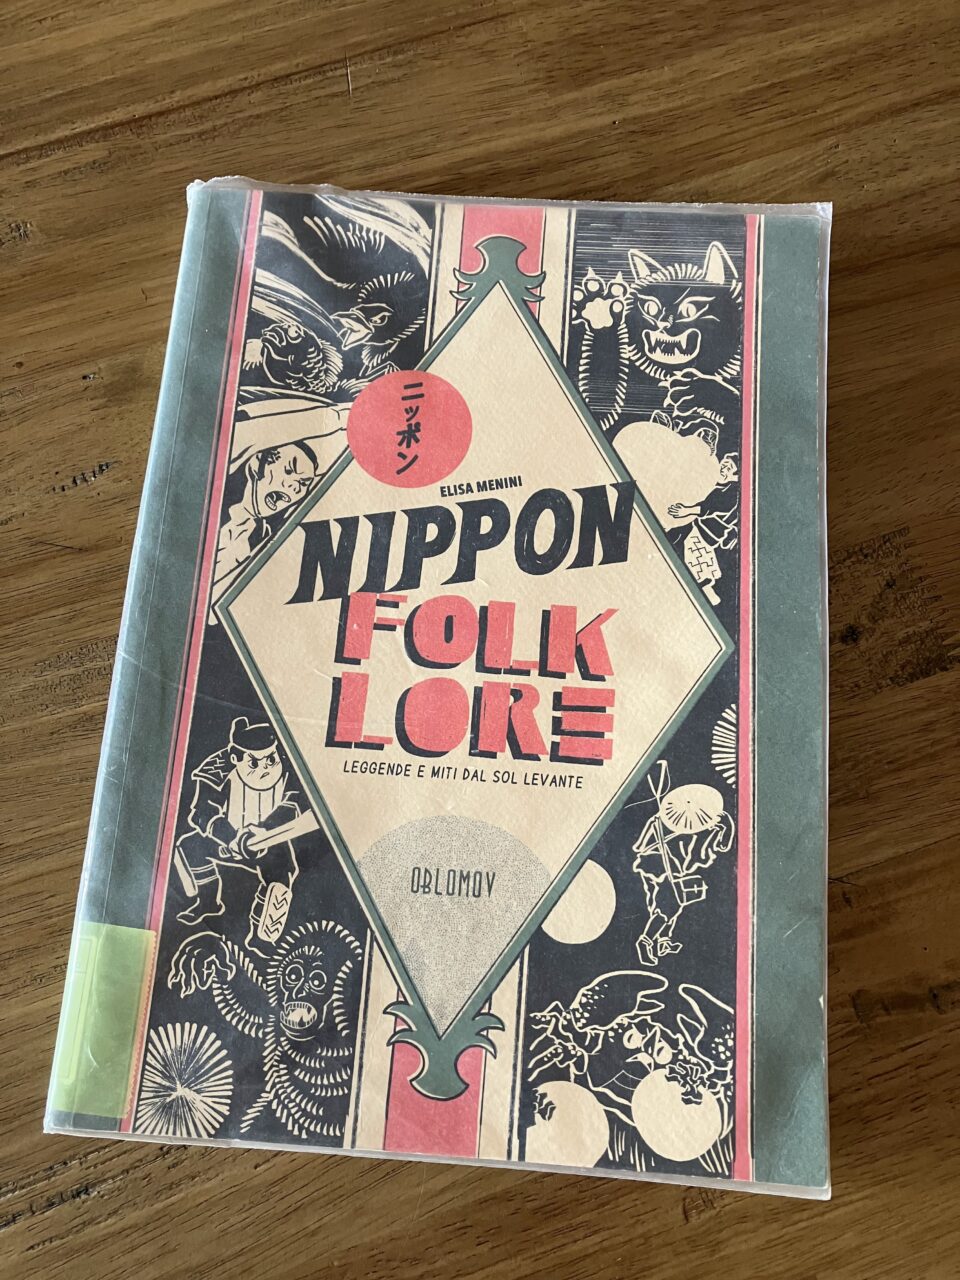 Nippon folklore